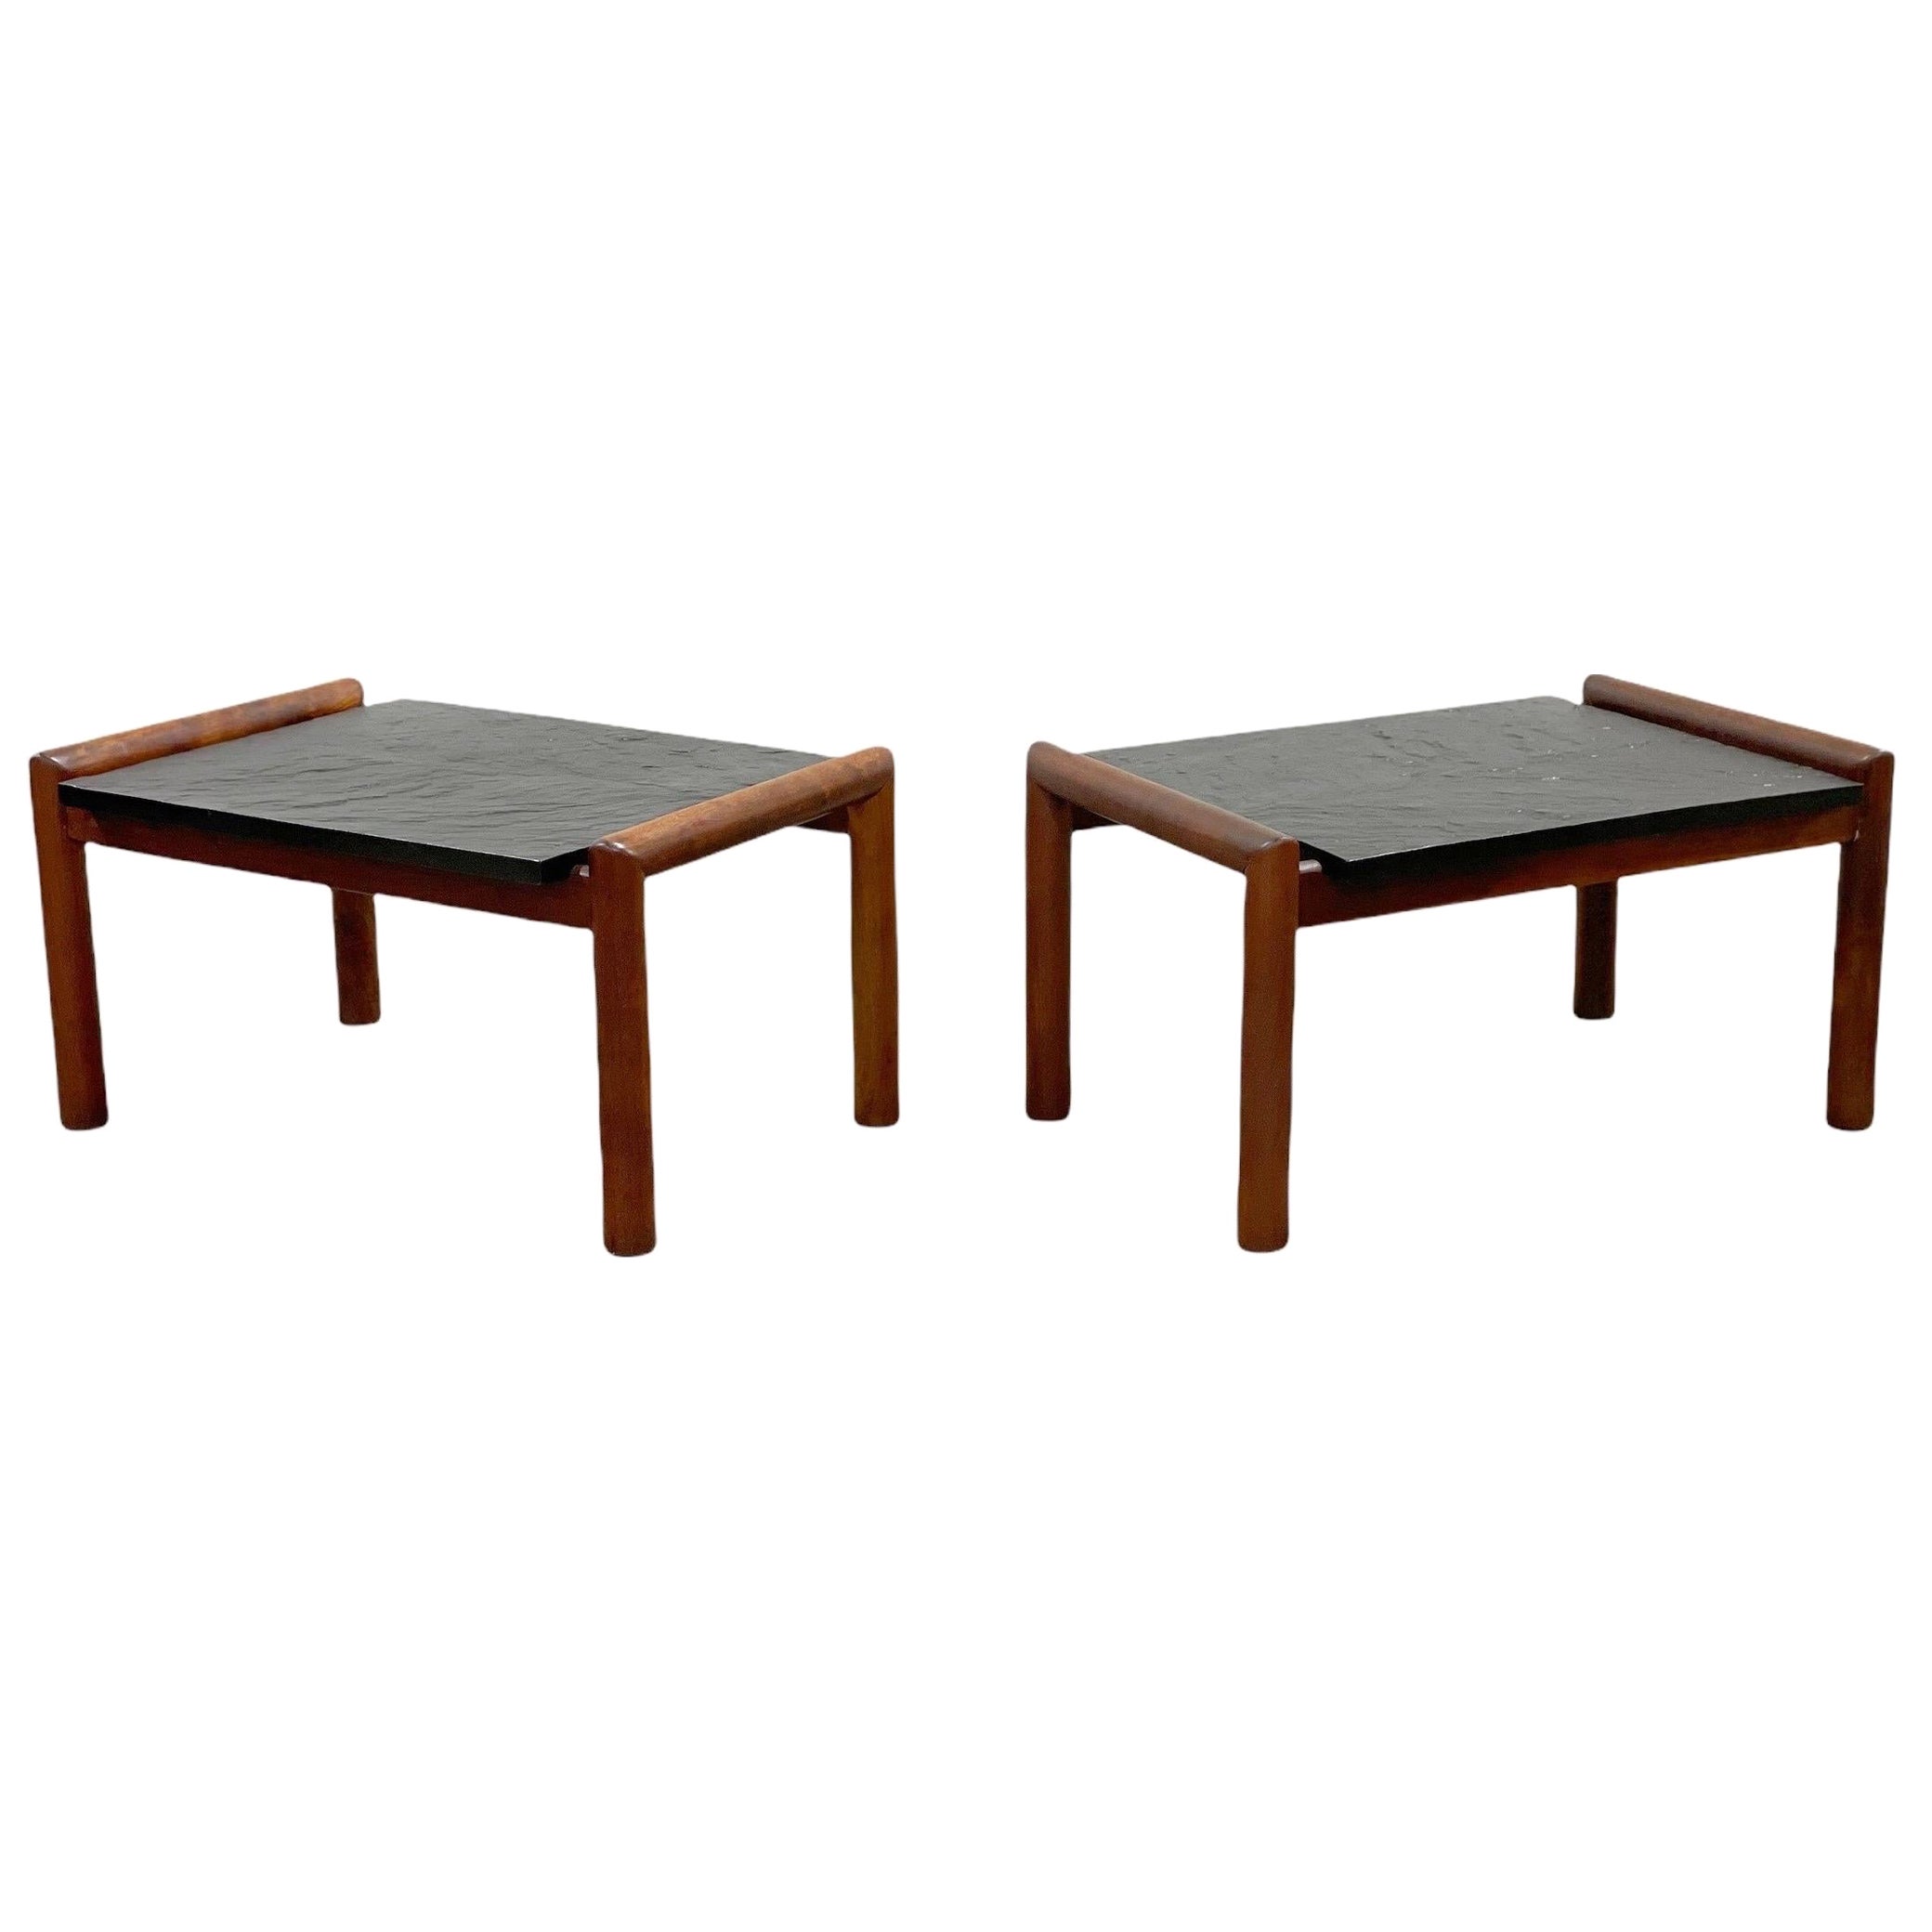 Adrian Pearsall Midcentury Organic Modern Side Tables - Walnut + Slate - a Pair